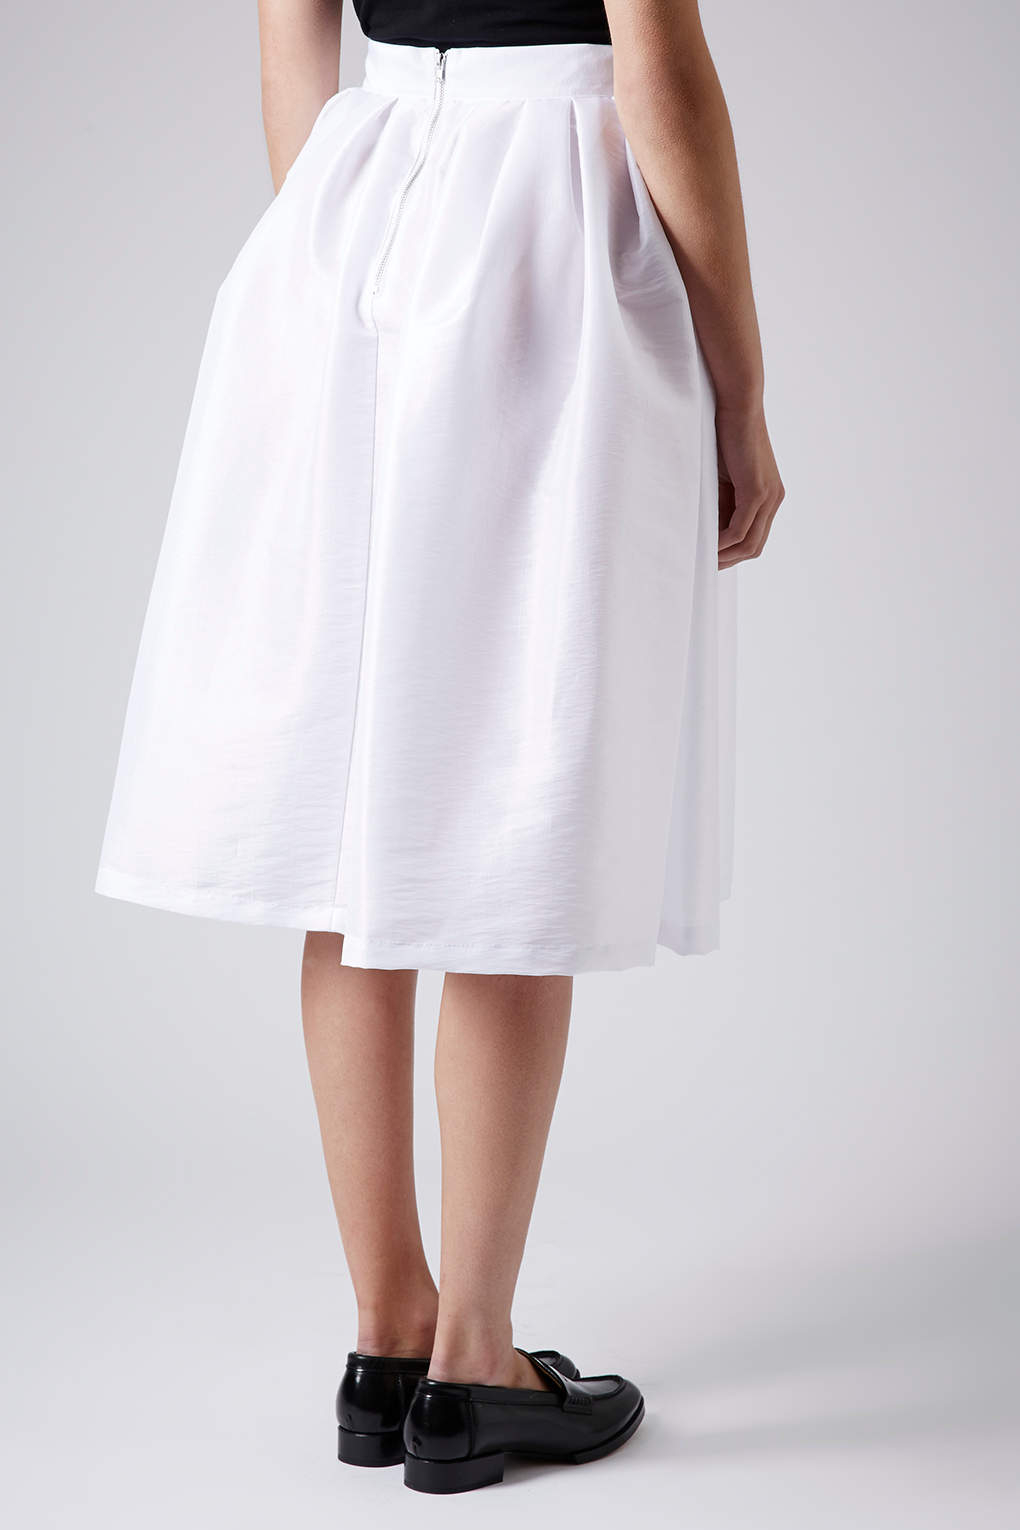 TOPSHOP Taffeta Midi Skirt in White - Lyst